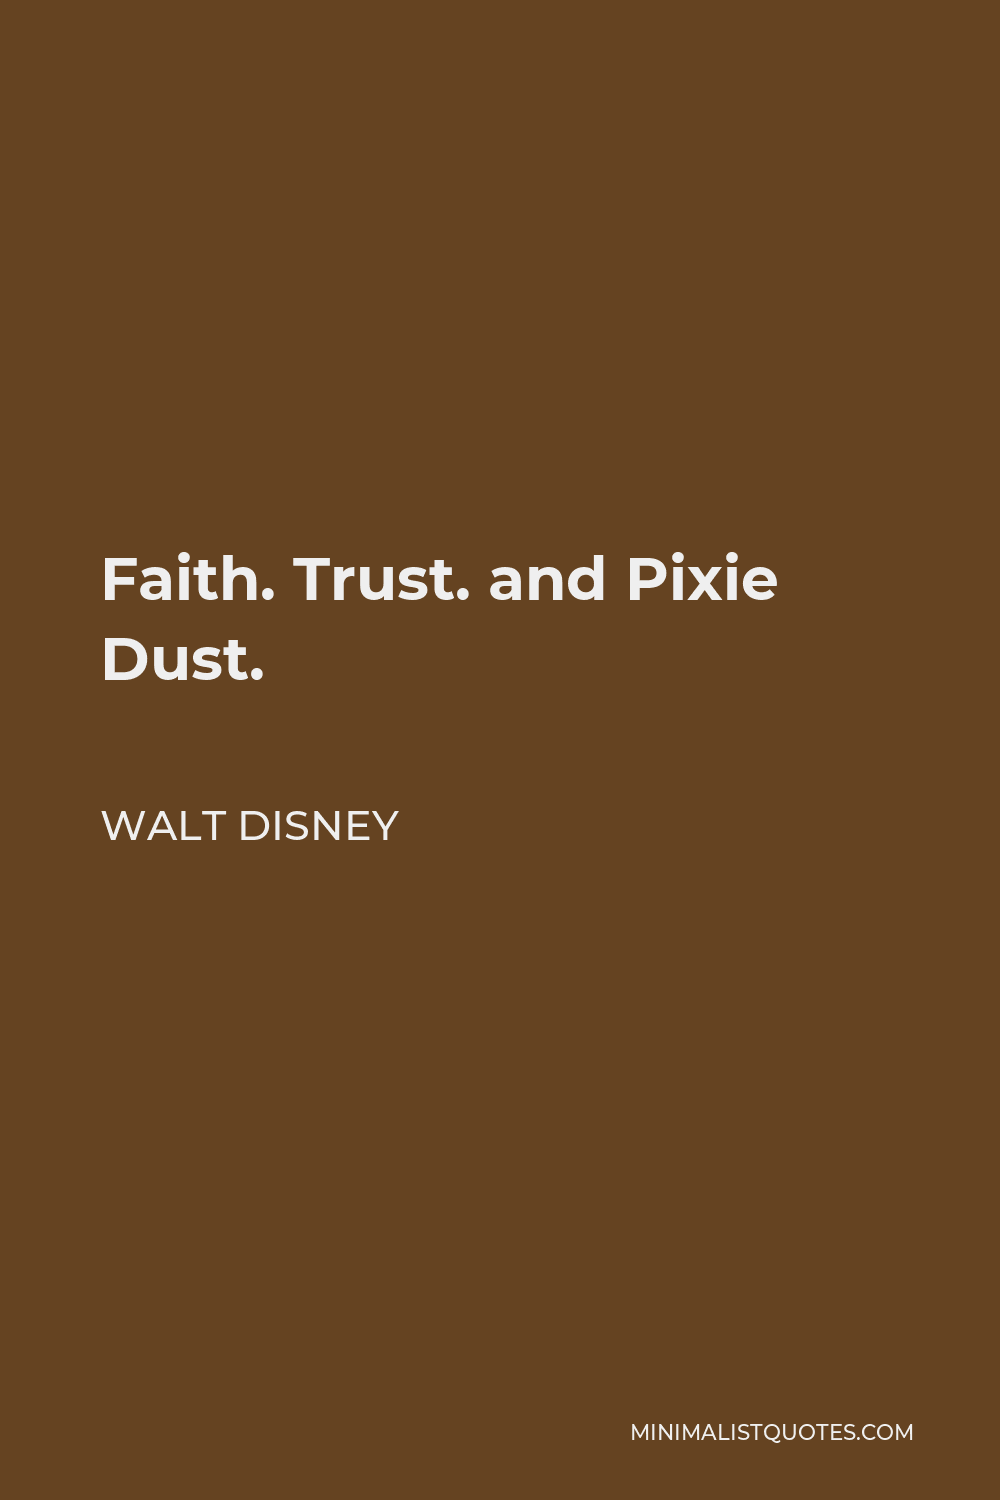 Walt Disney Quote - Faith. Trust. and Pixie Dust.